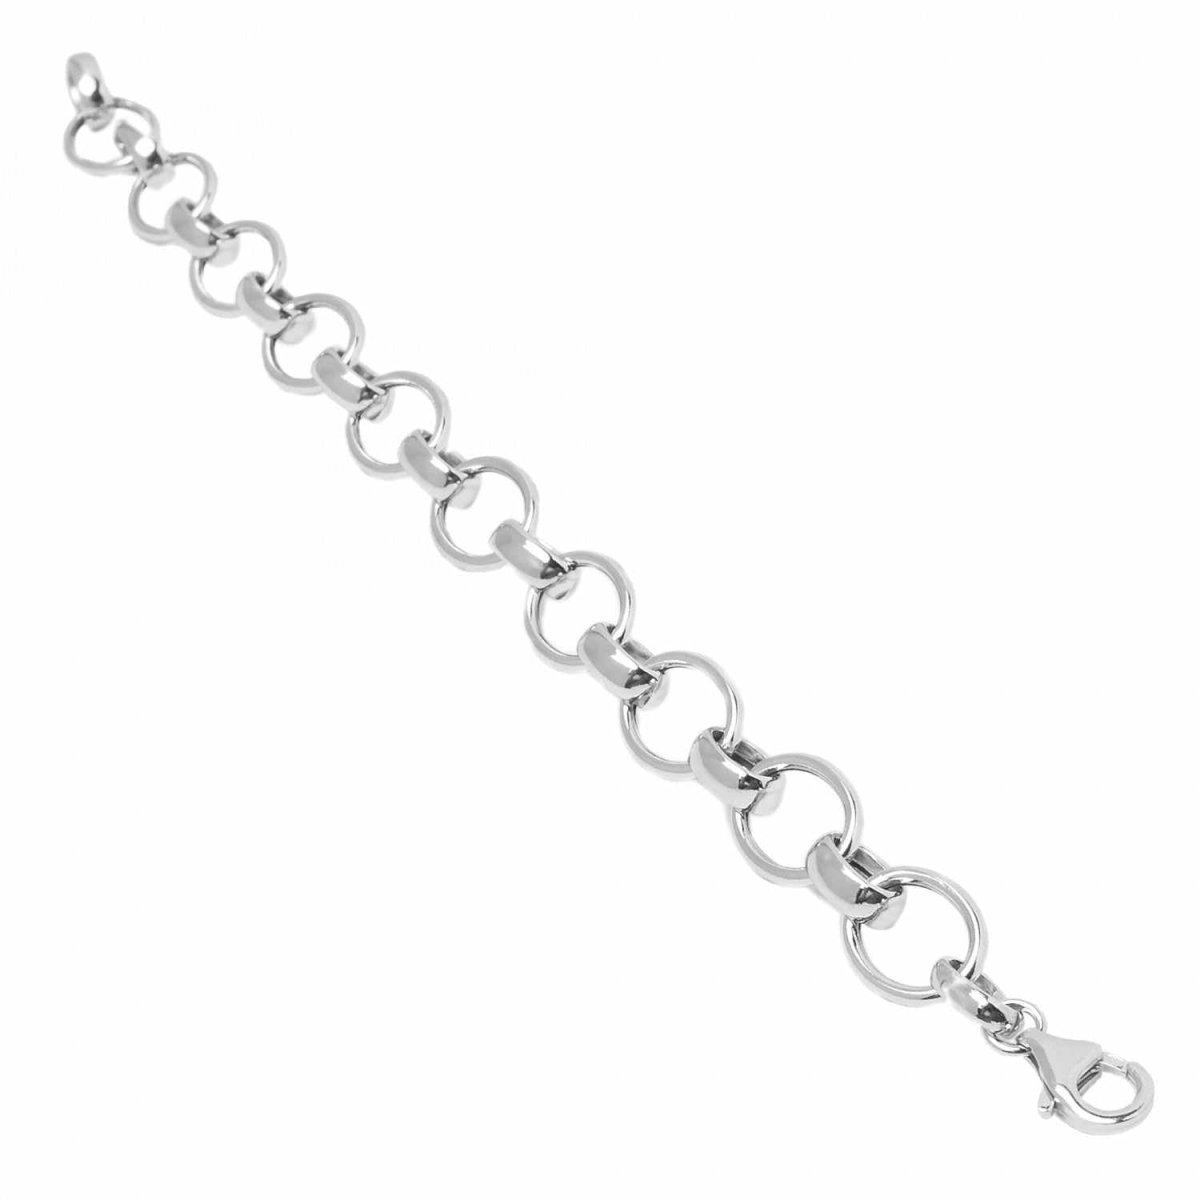 Bracelet - Silver link bracelet flat oval design